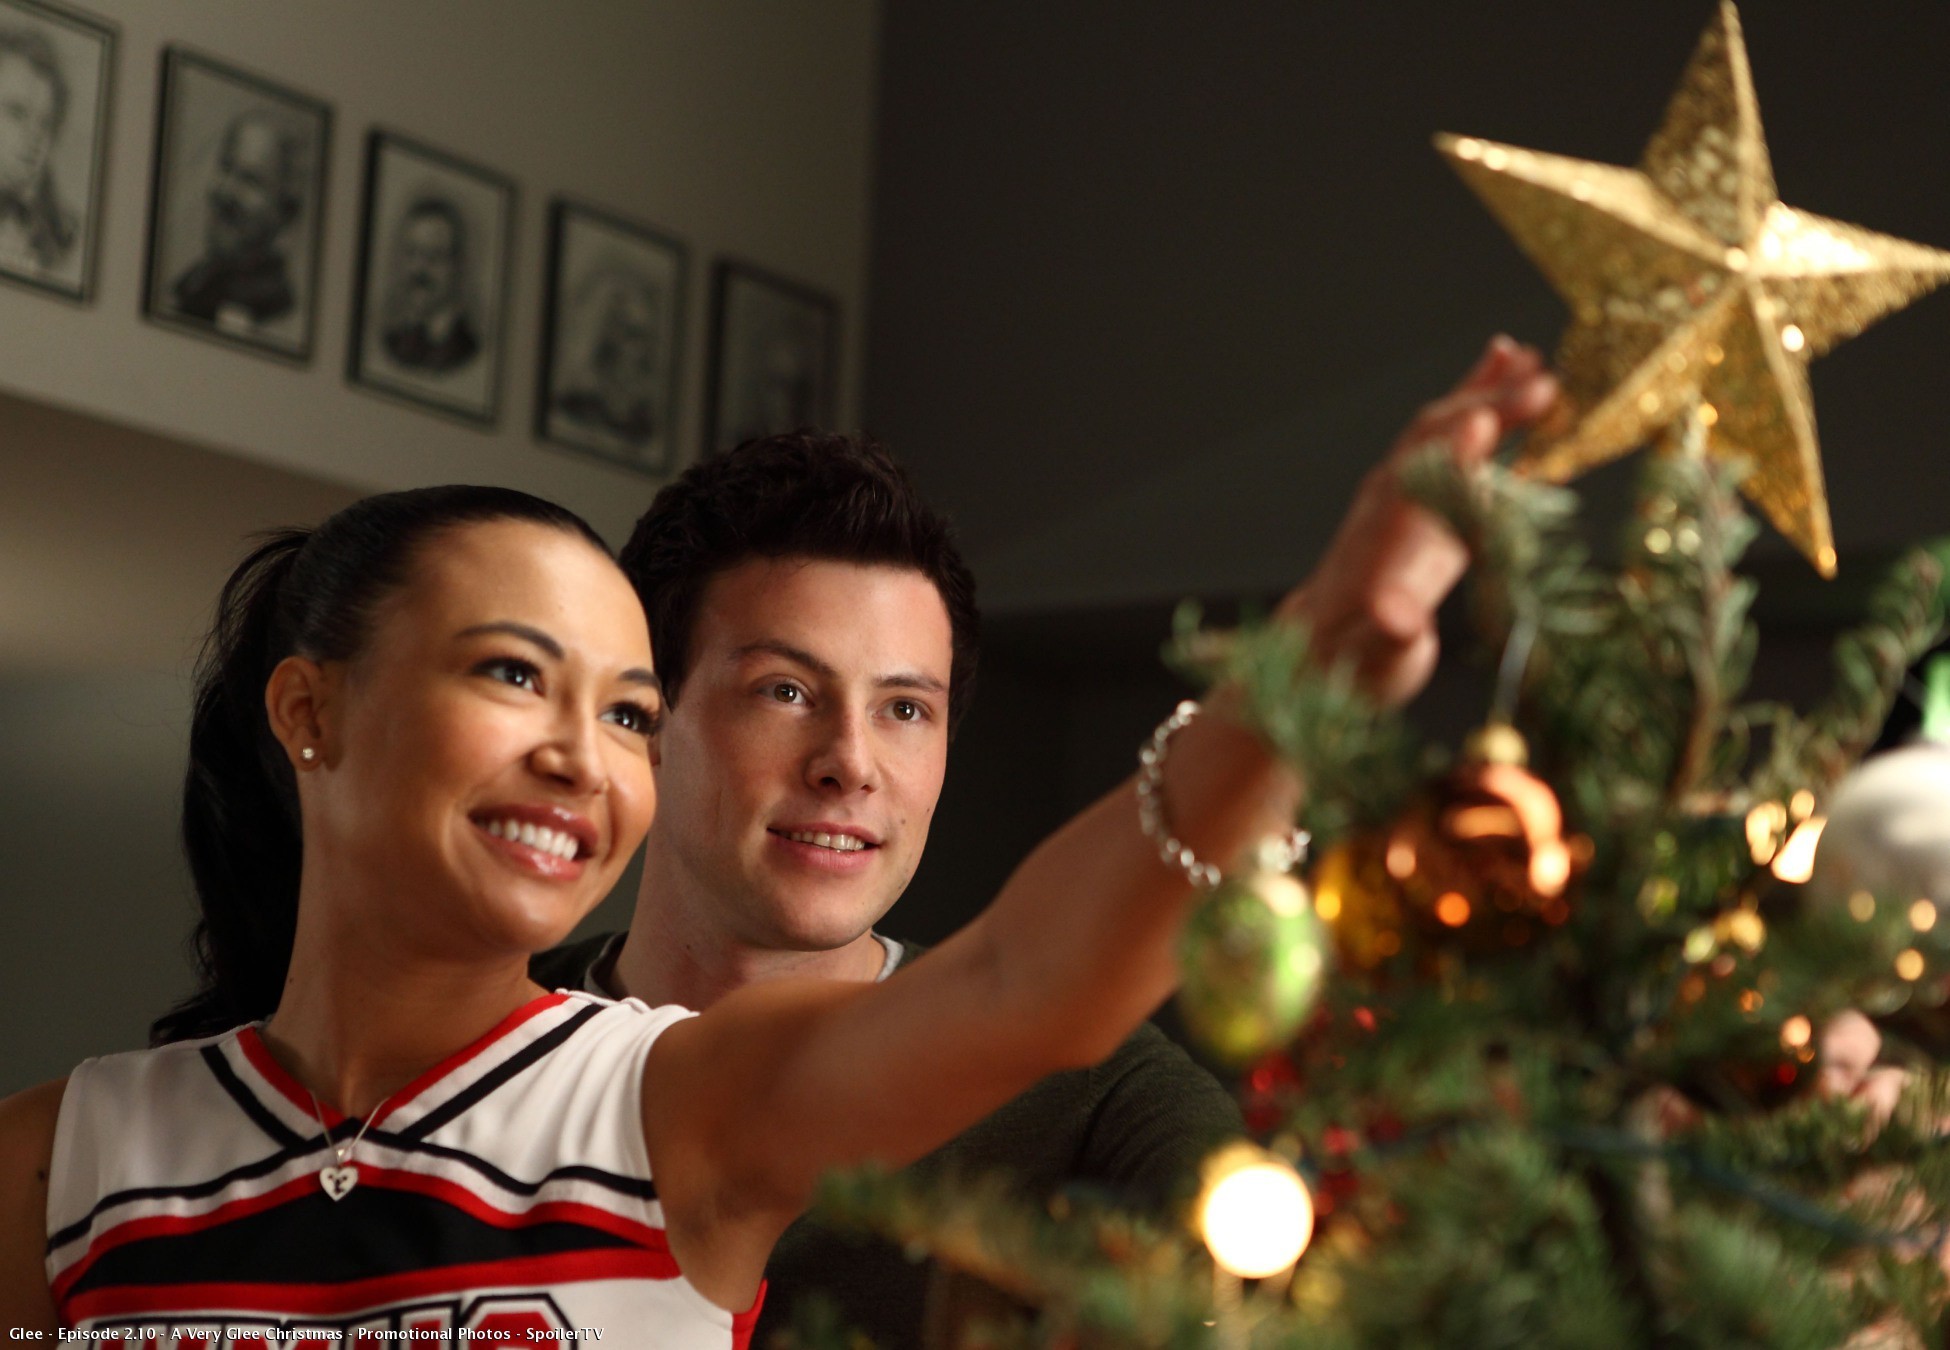 A Very Glee Christmas Promotional Photos Photo